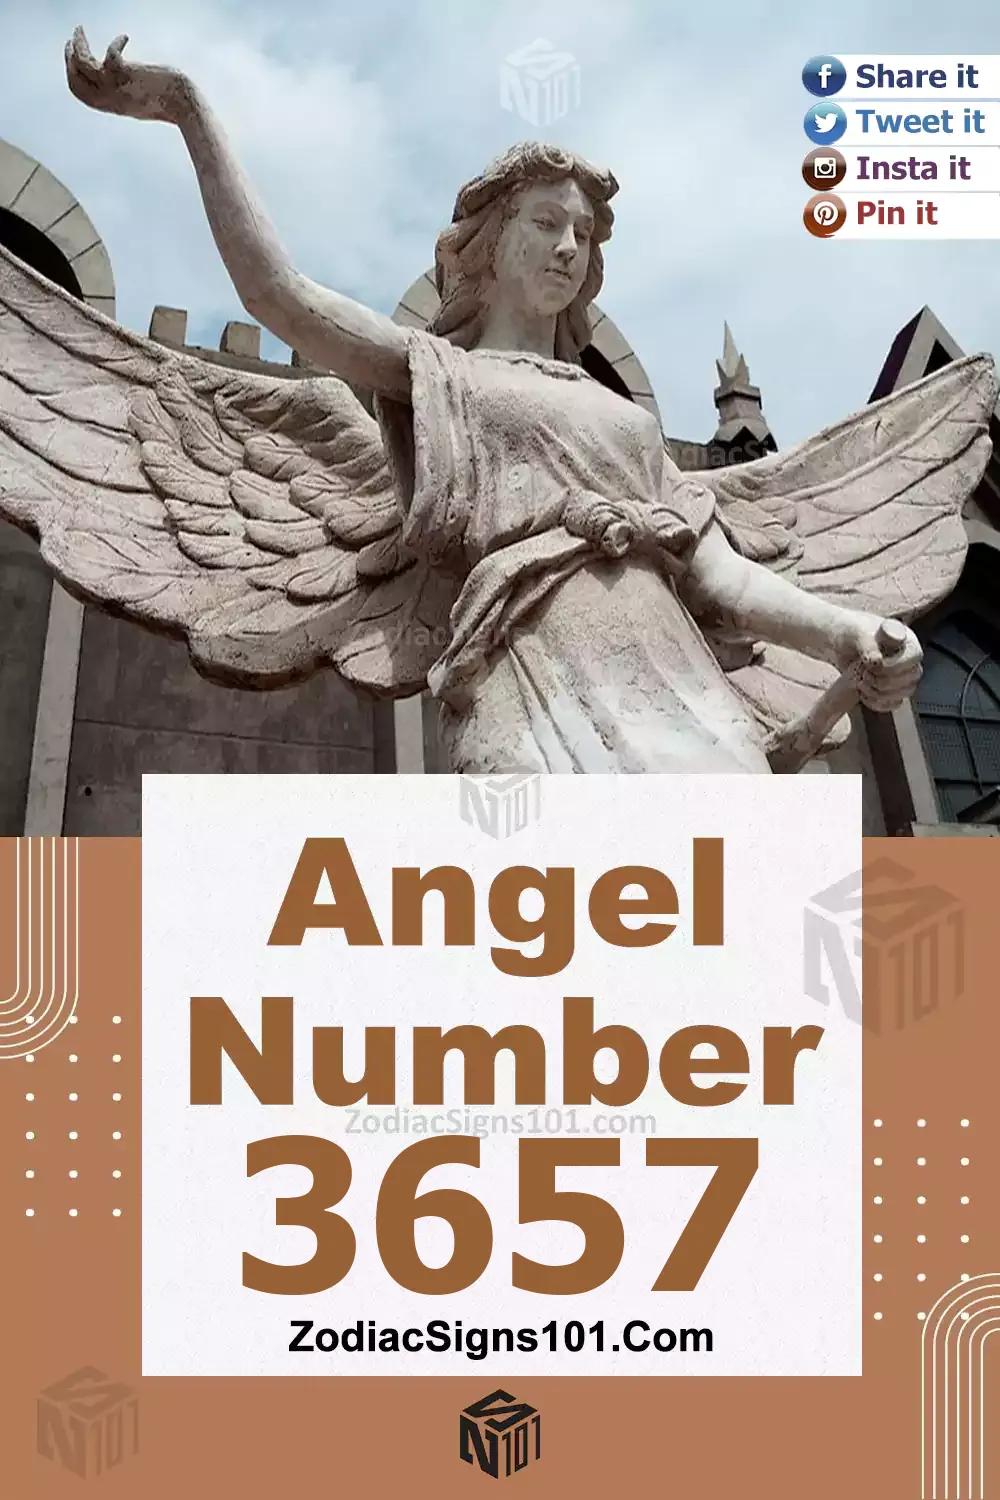 3657-Angel-Number-Meaning.jpg